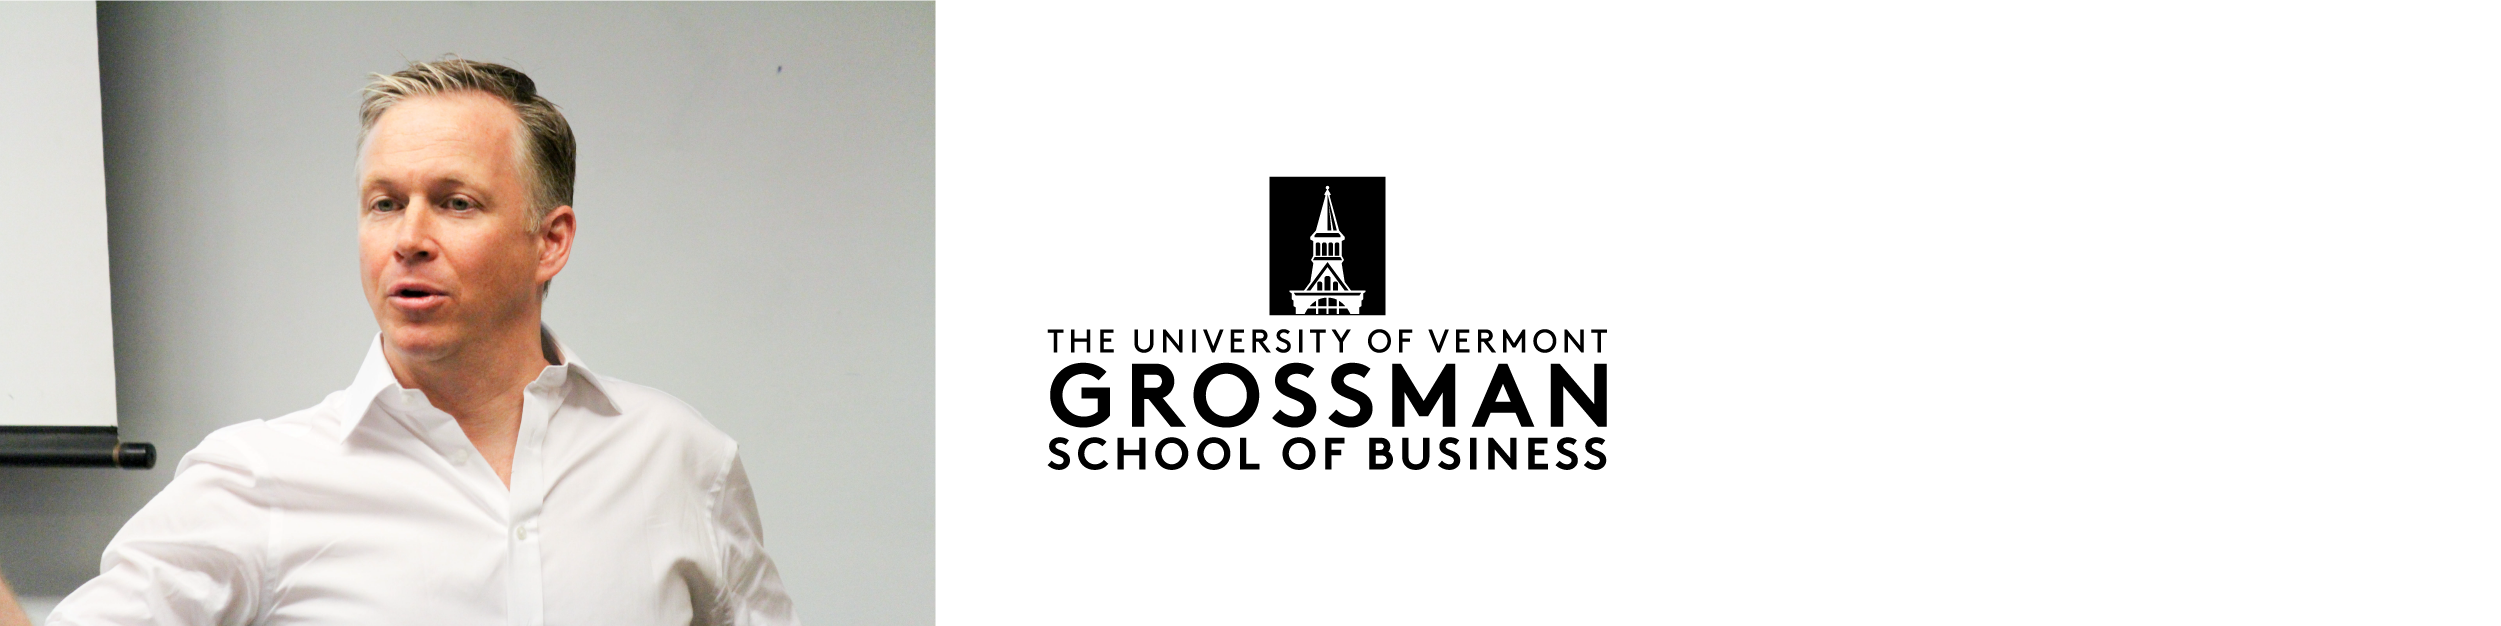 grossman school of business grossman school of business the university of vermont grossman school of business grossman